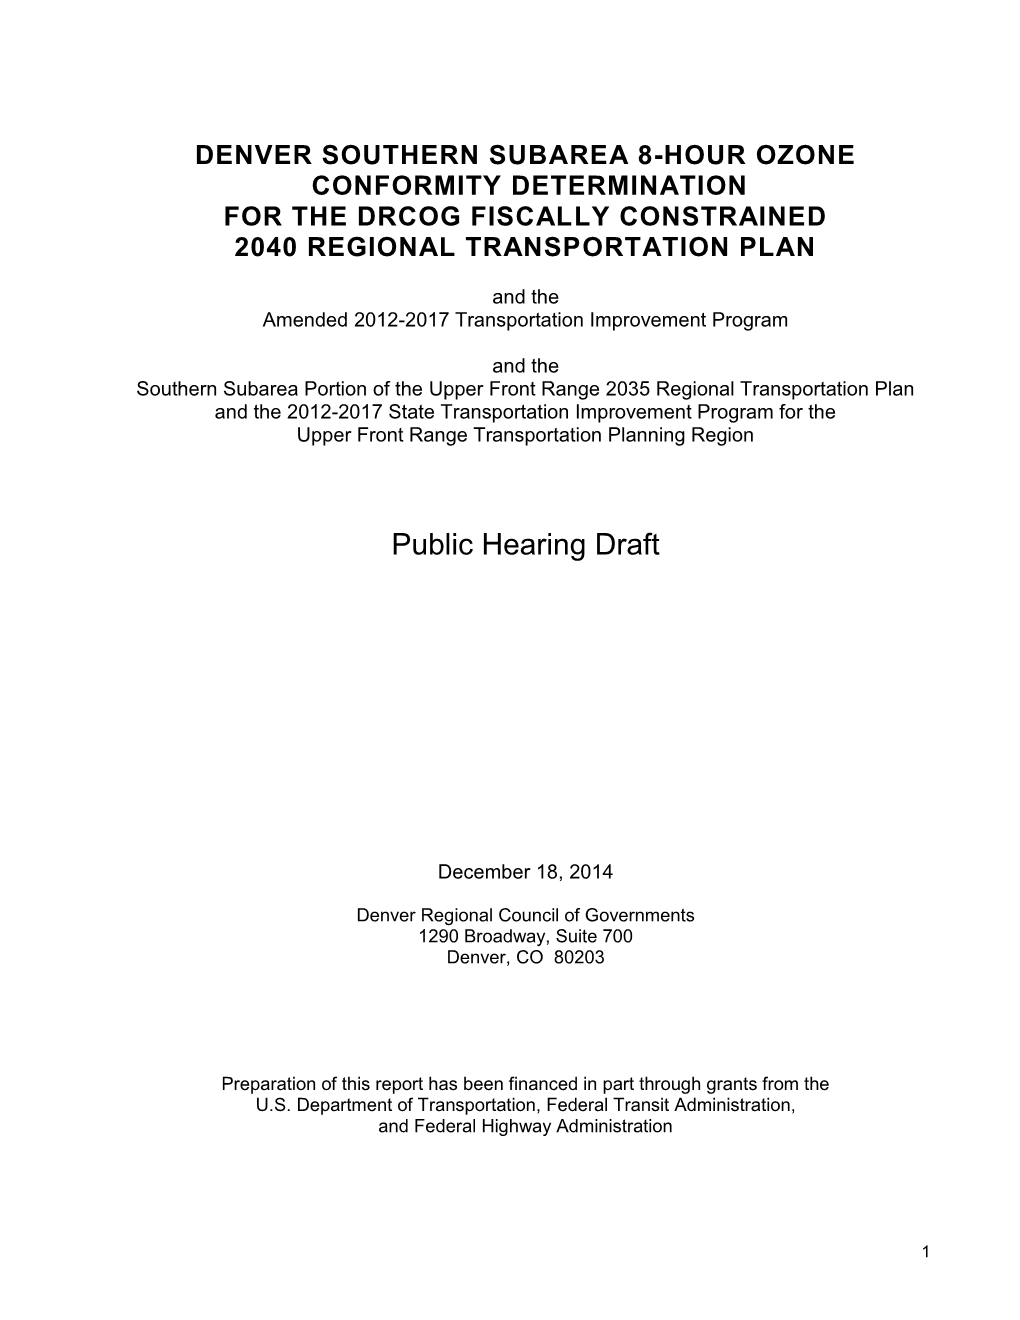 DRAFT Public Hearing 2040 MVRTP Southern Subarea 8